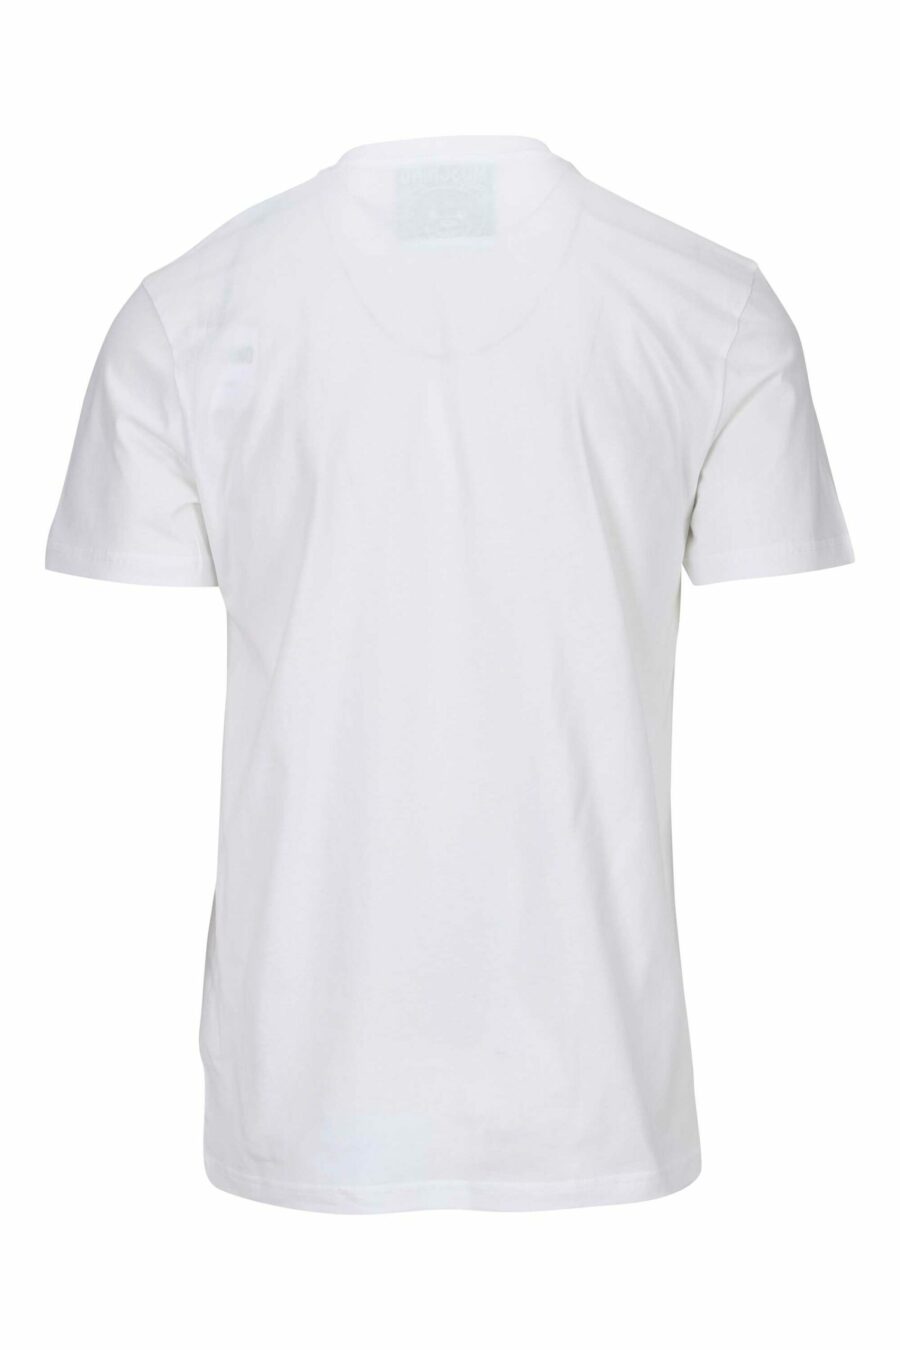 Camiseta blanca con minilogo "teddy" bordado - 667113455334 1 scaled